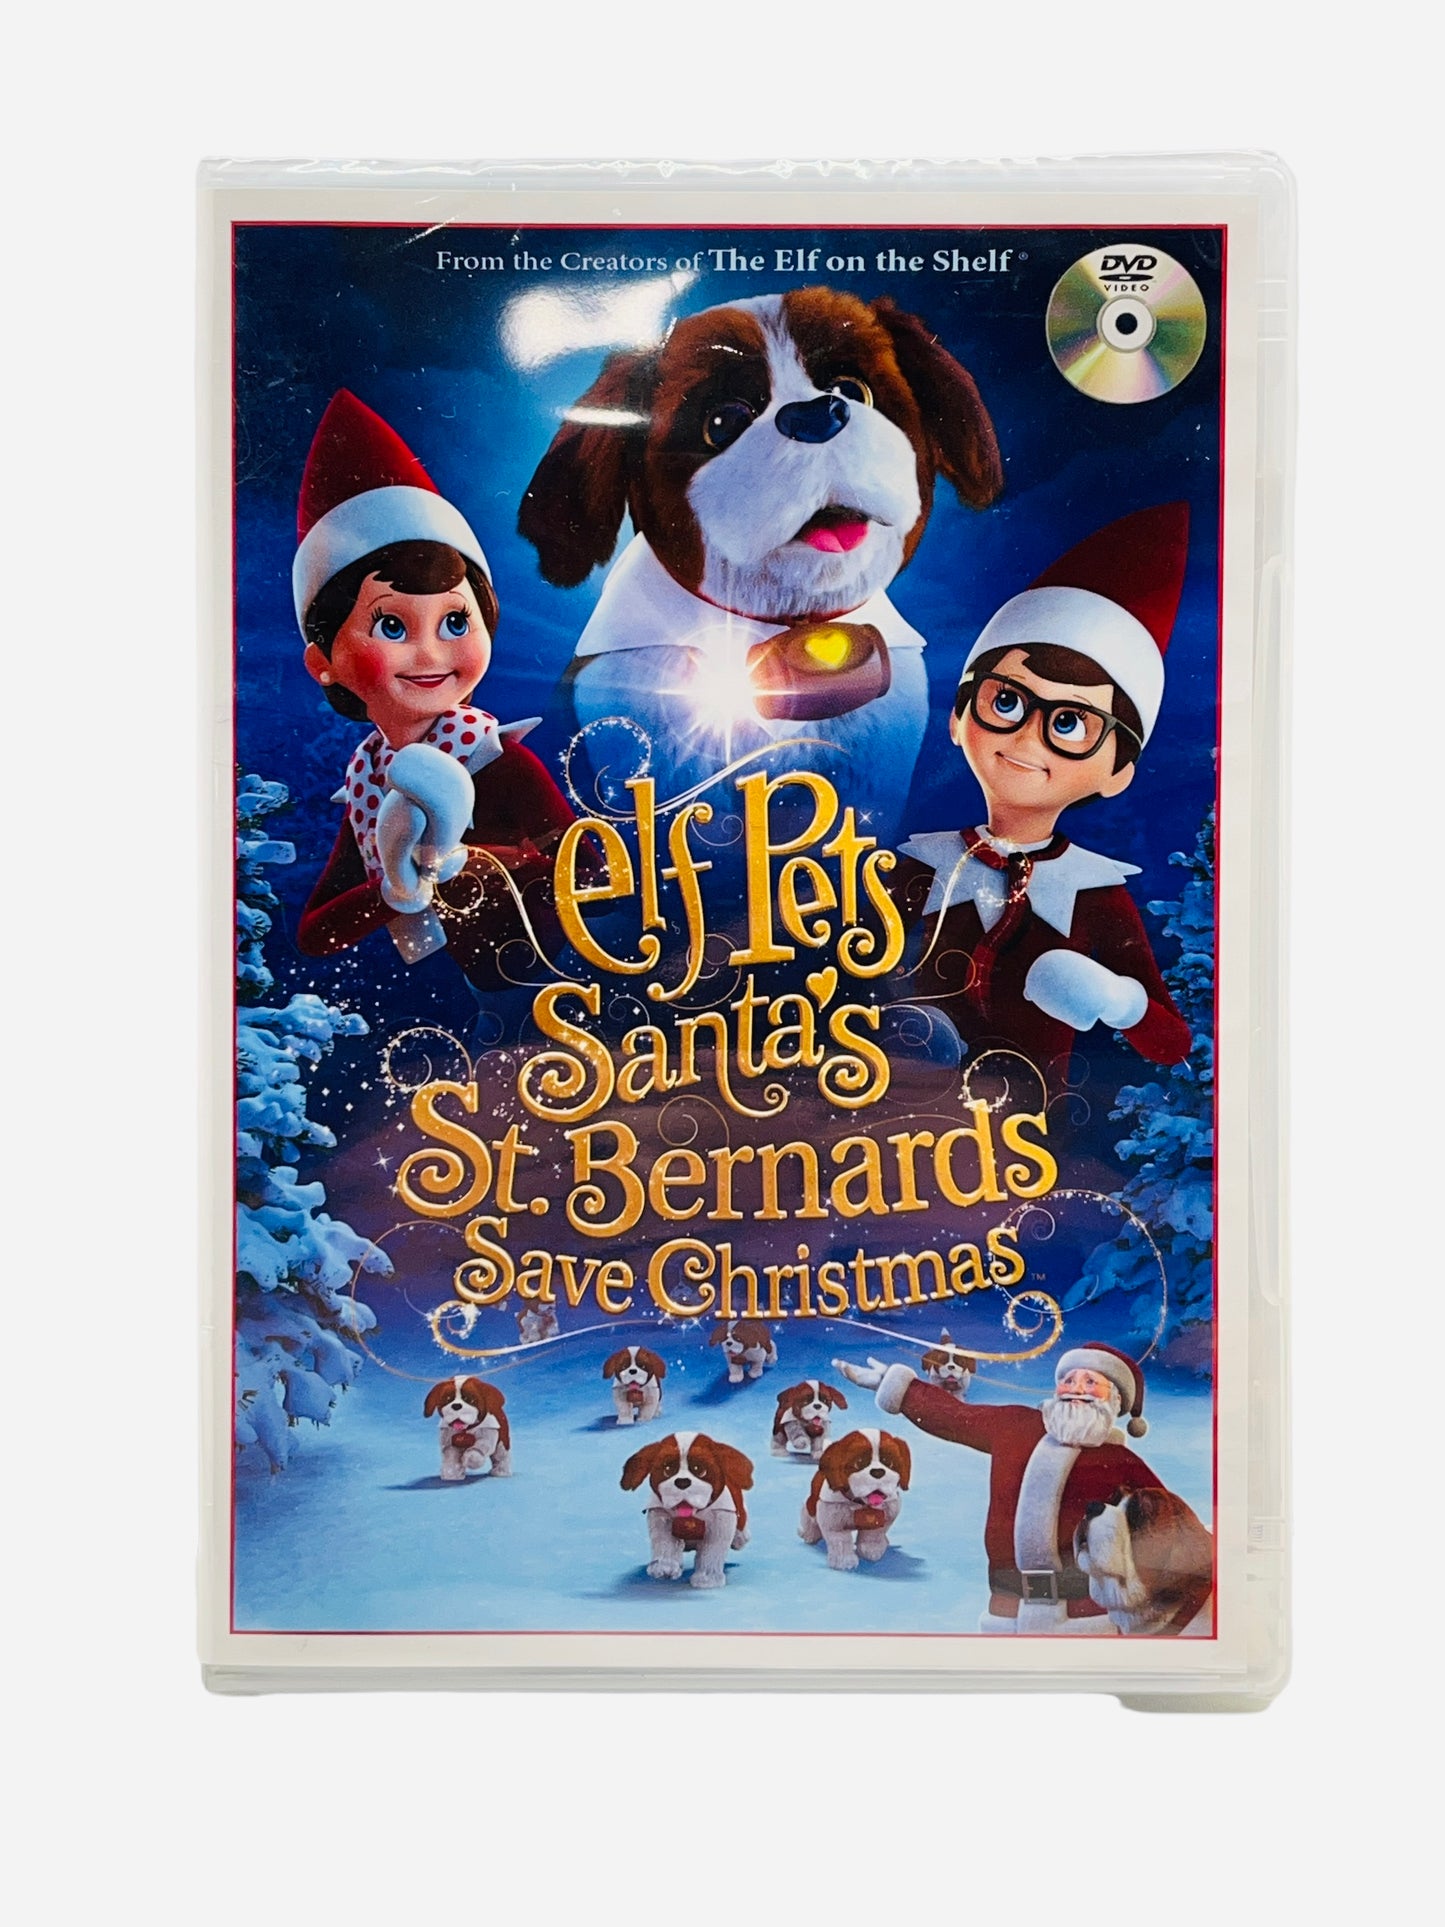 Elf Pets Santa's St. Bernards Save Christmas Dvd